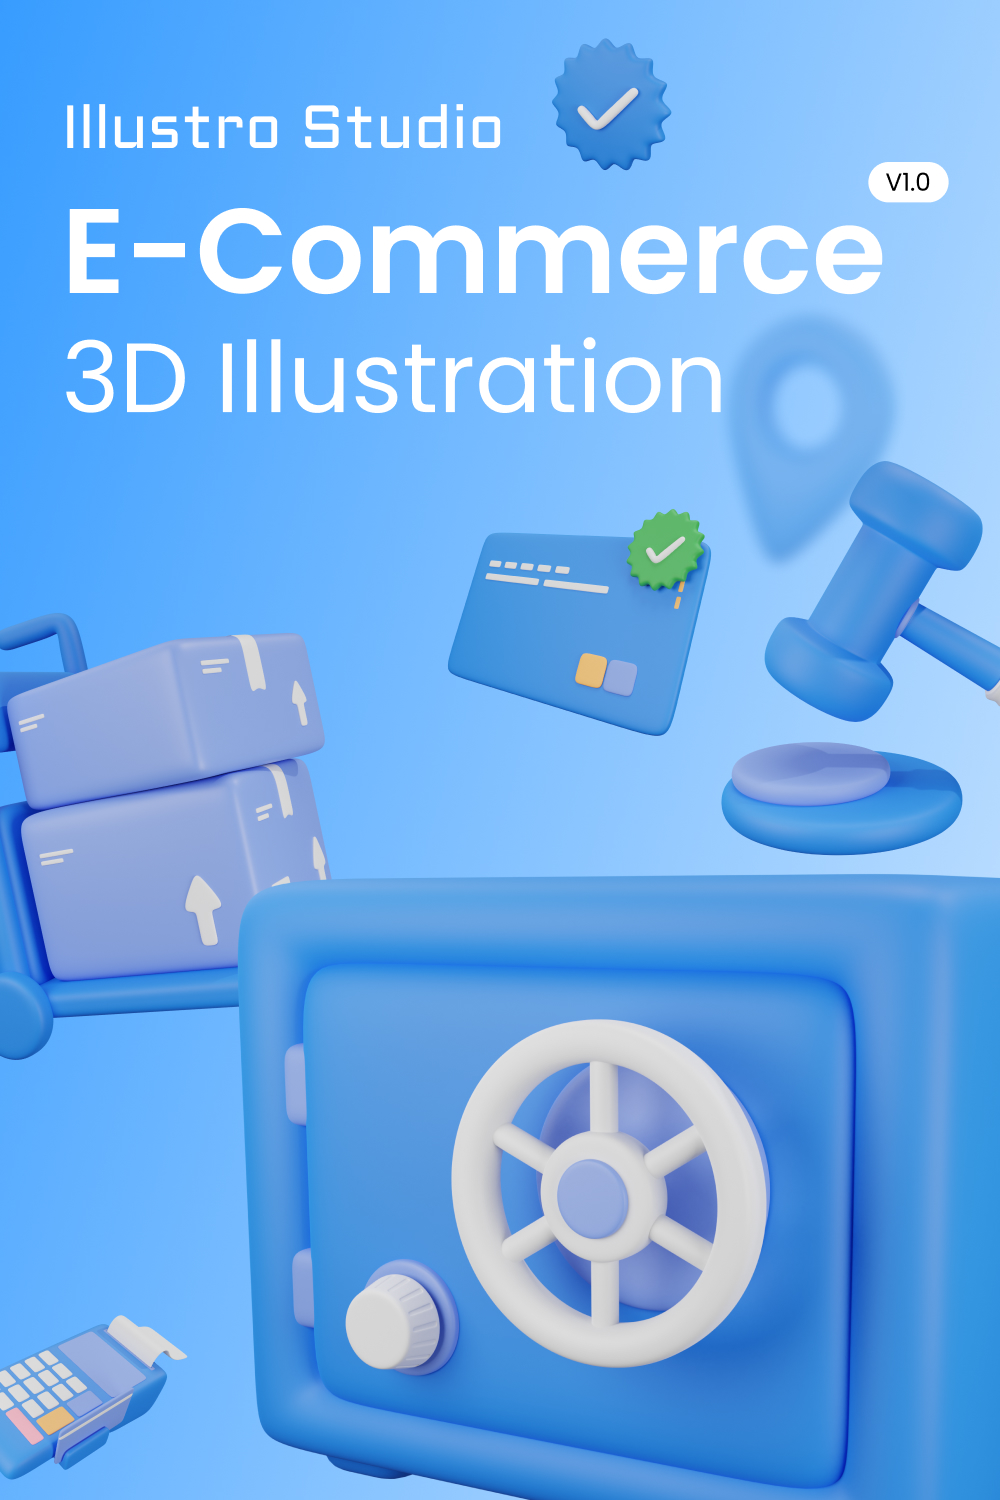 31 - E-Commerce 3D Illustration - only $20 pinterest preview image.